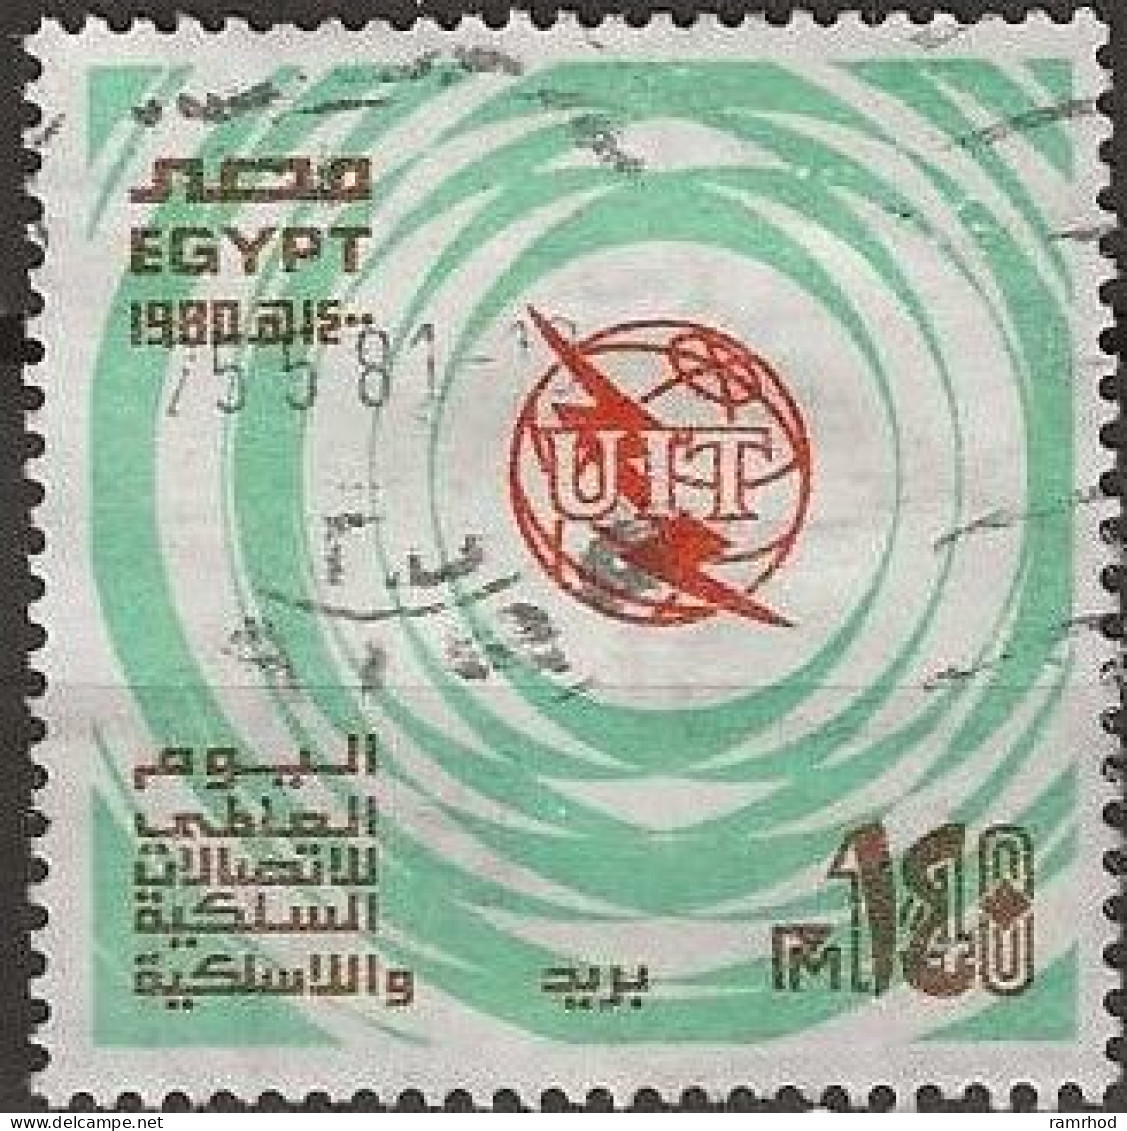 EGYPT 1980 United Nations Day - 140m. ITU Emblem (International Tele-communications Day) FU - Gebraucht